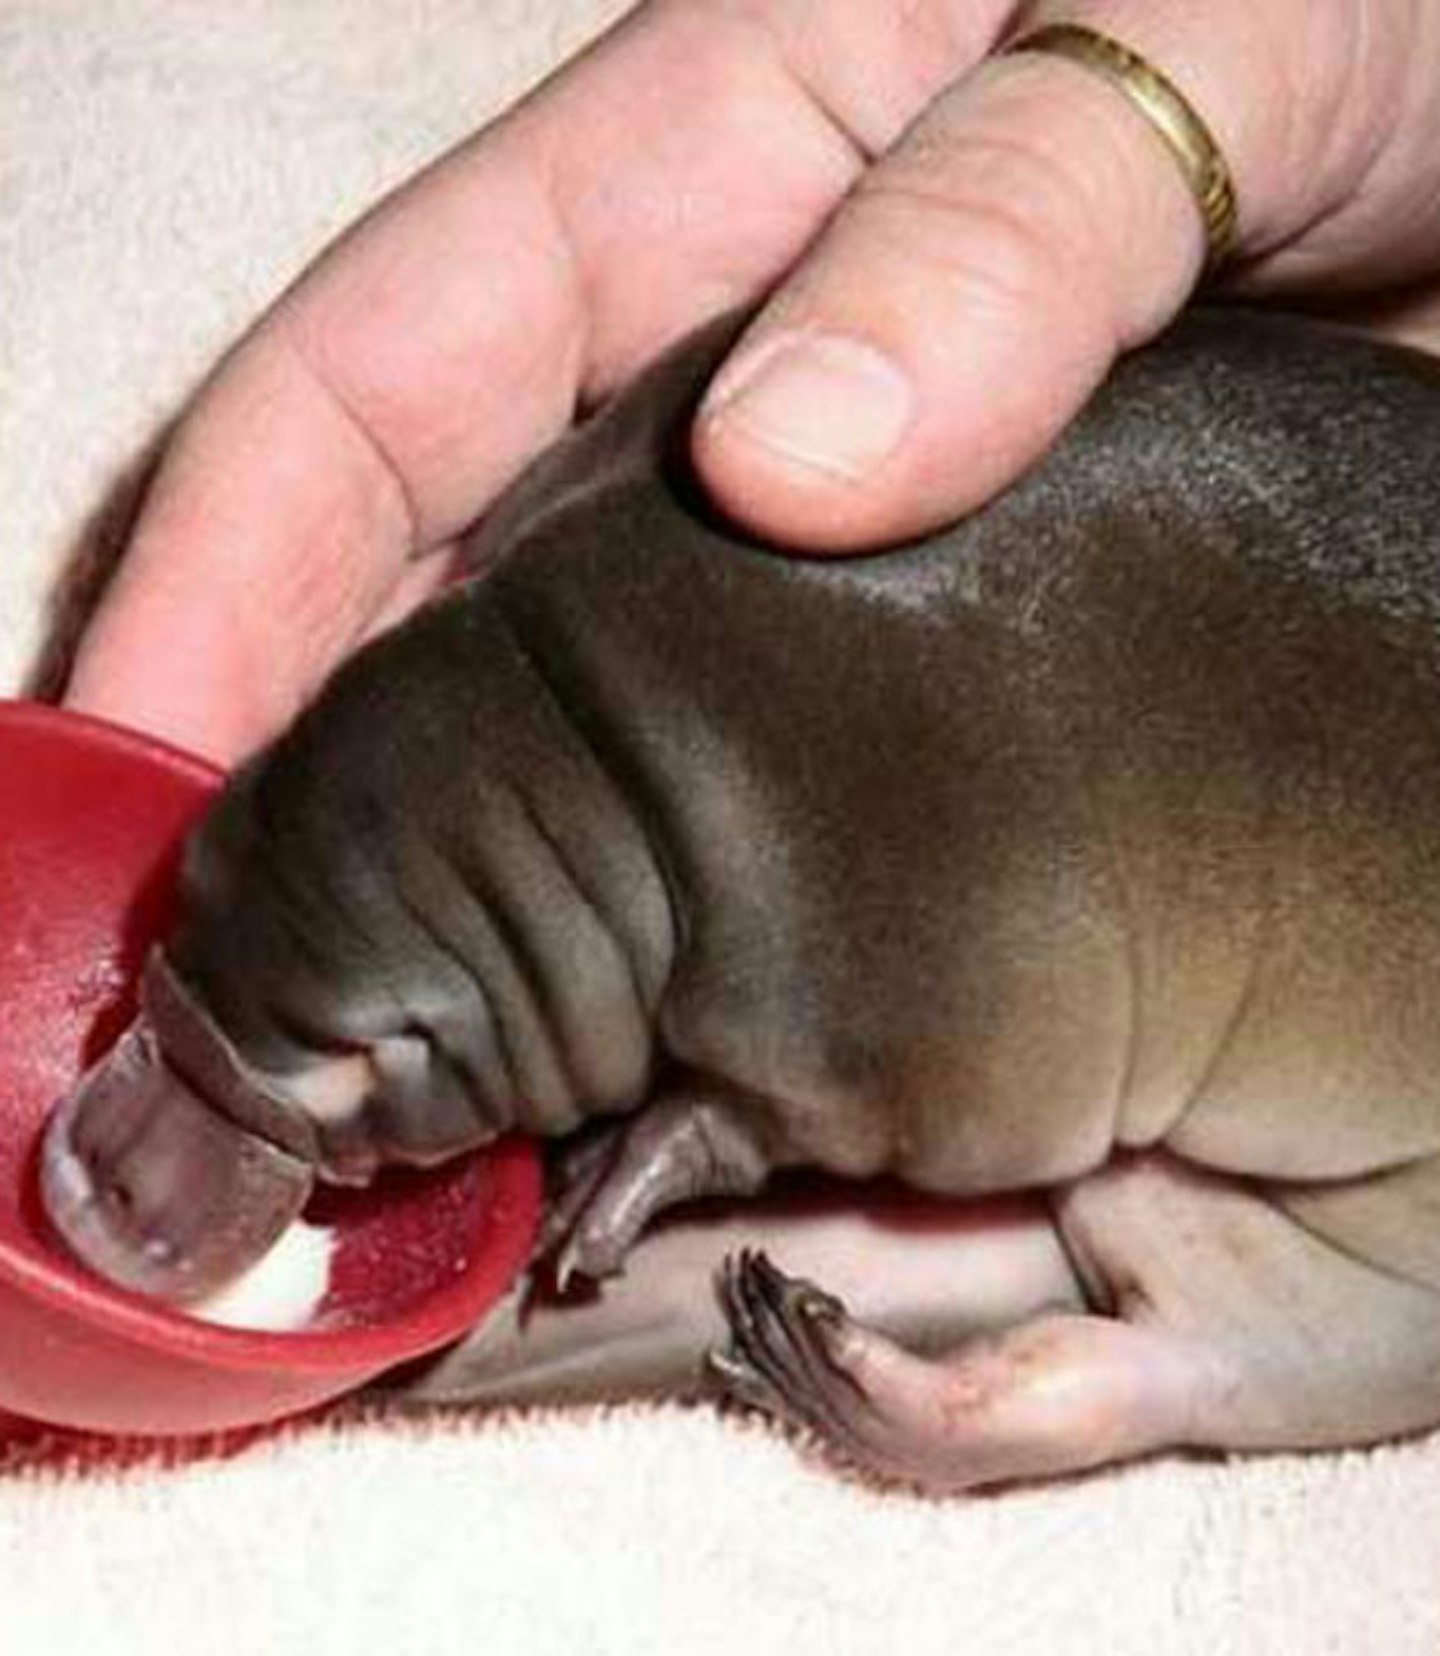 Baby platypus